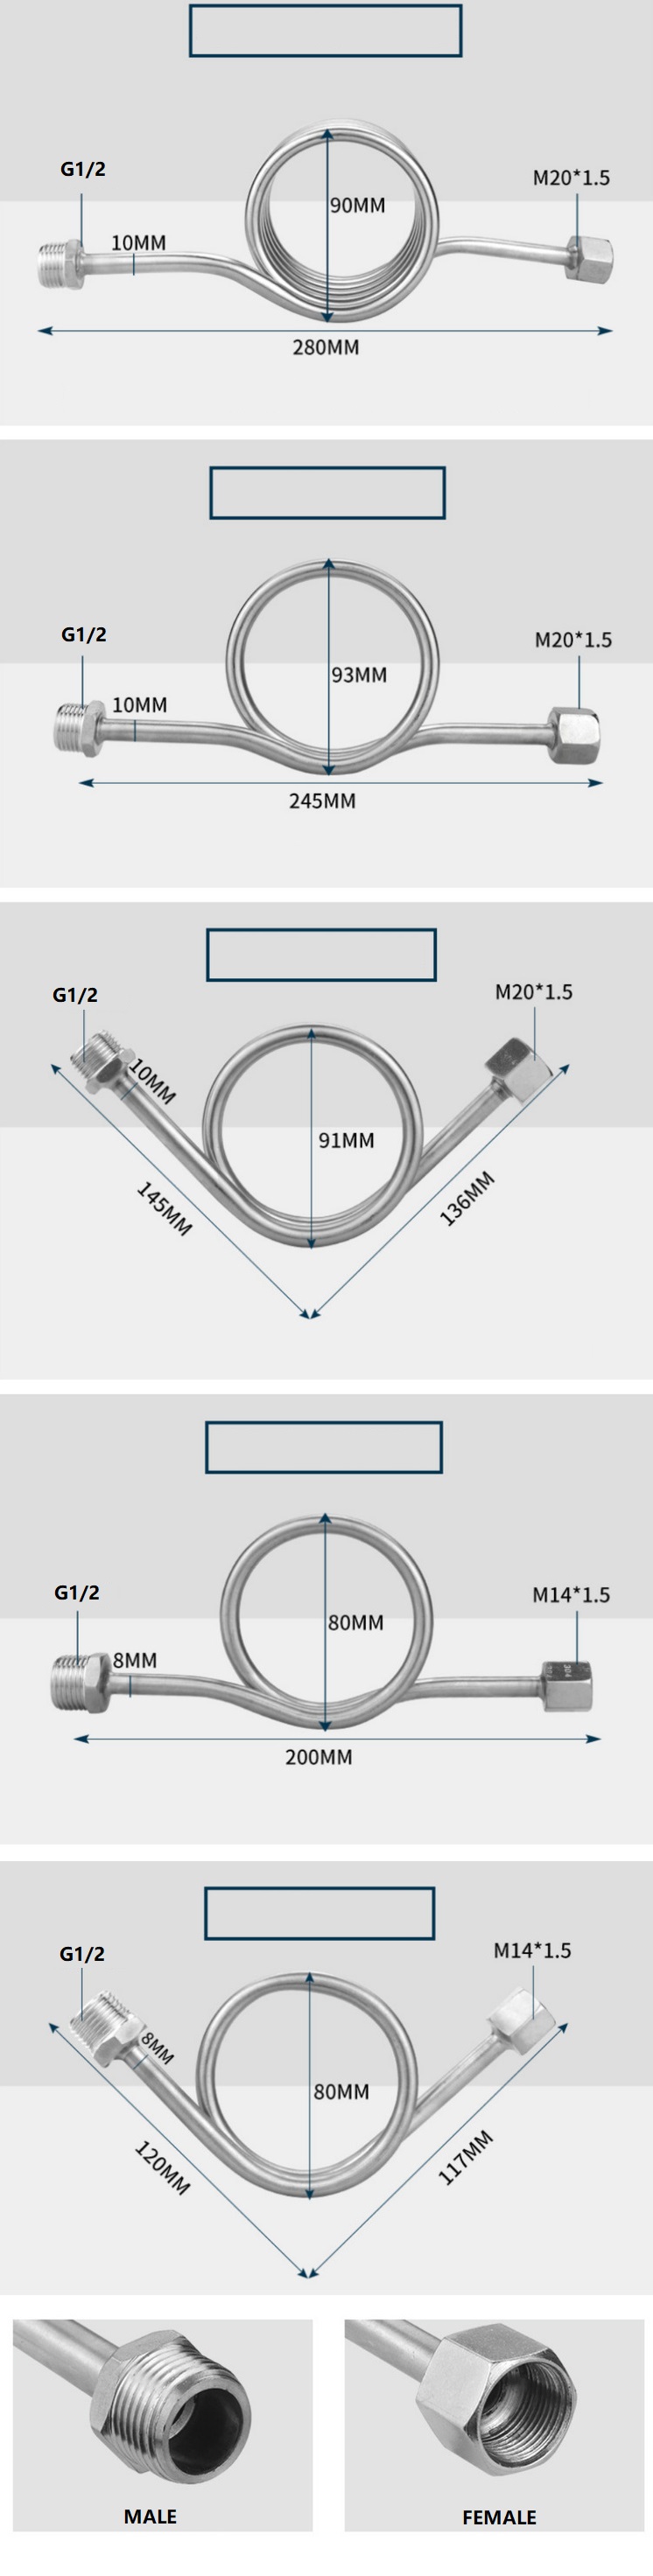 Pressure gauge siphon details